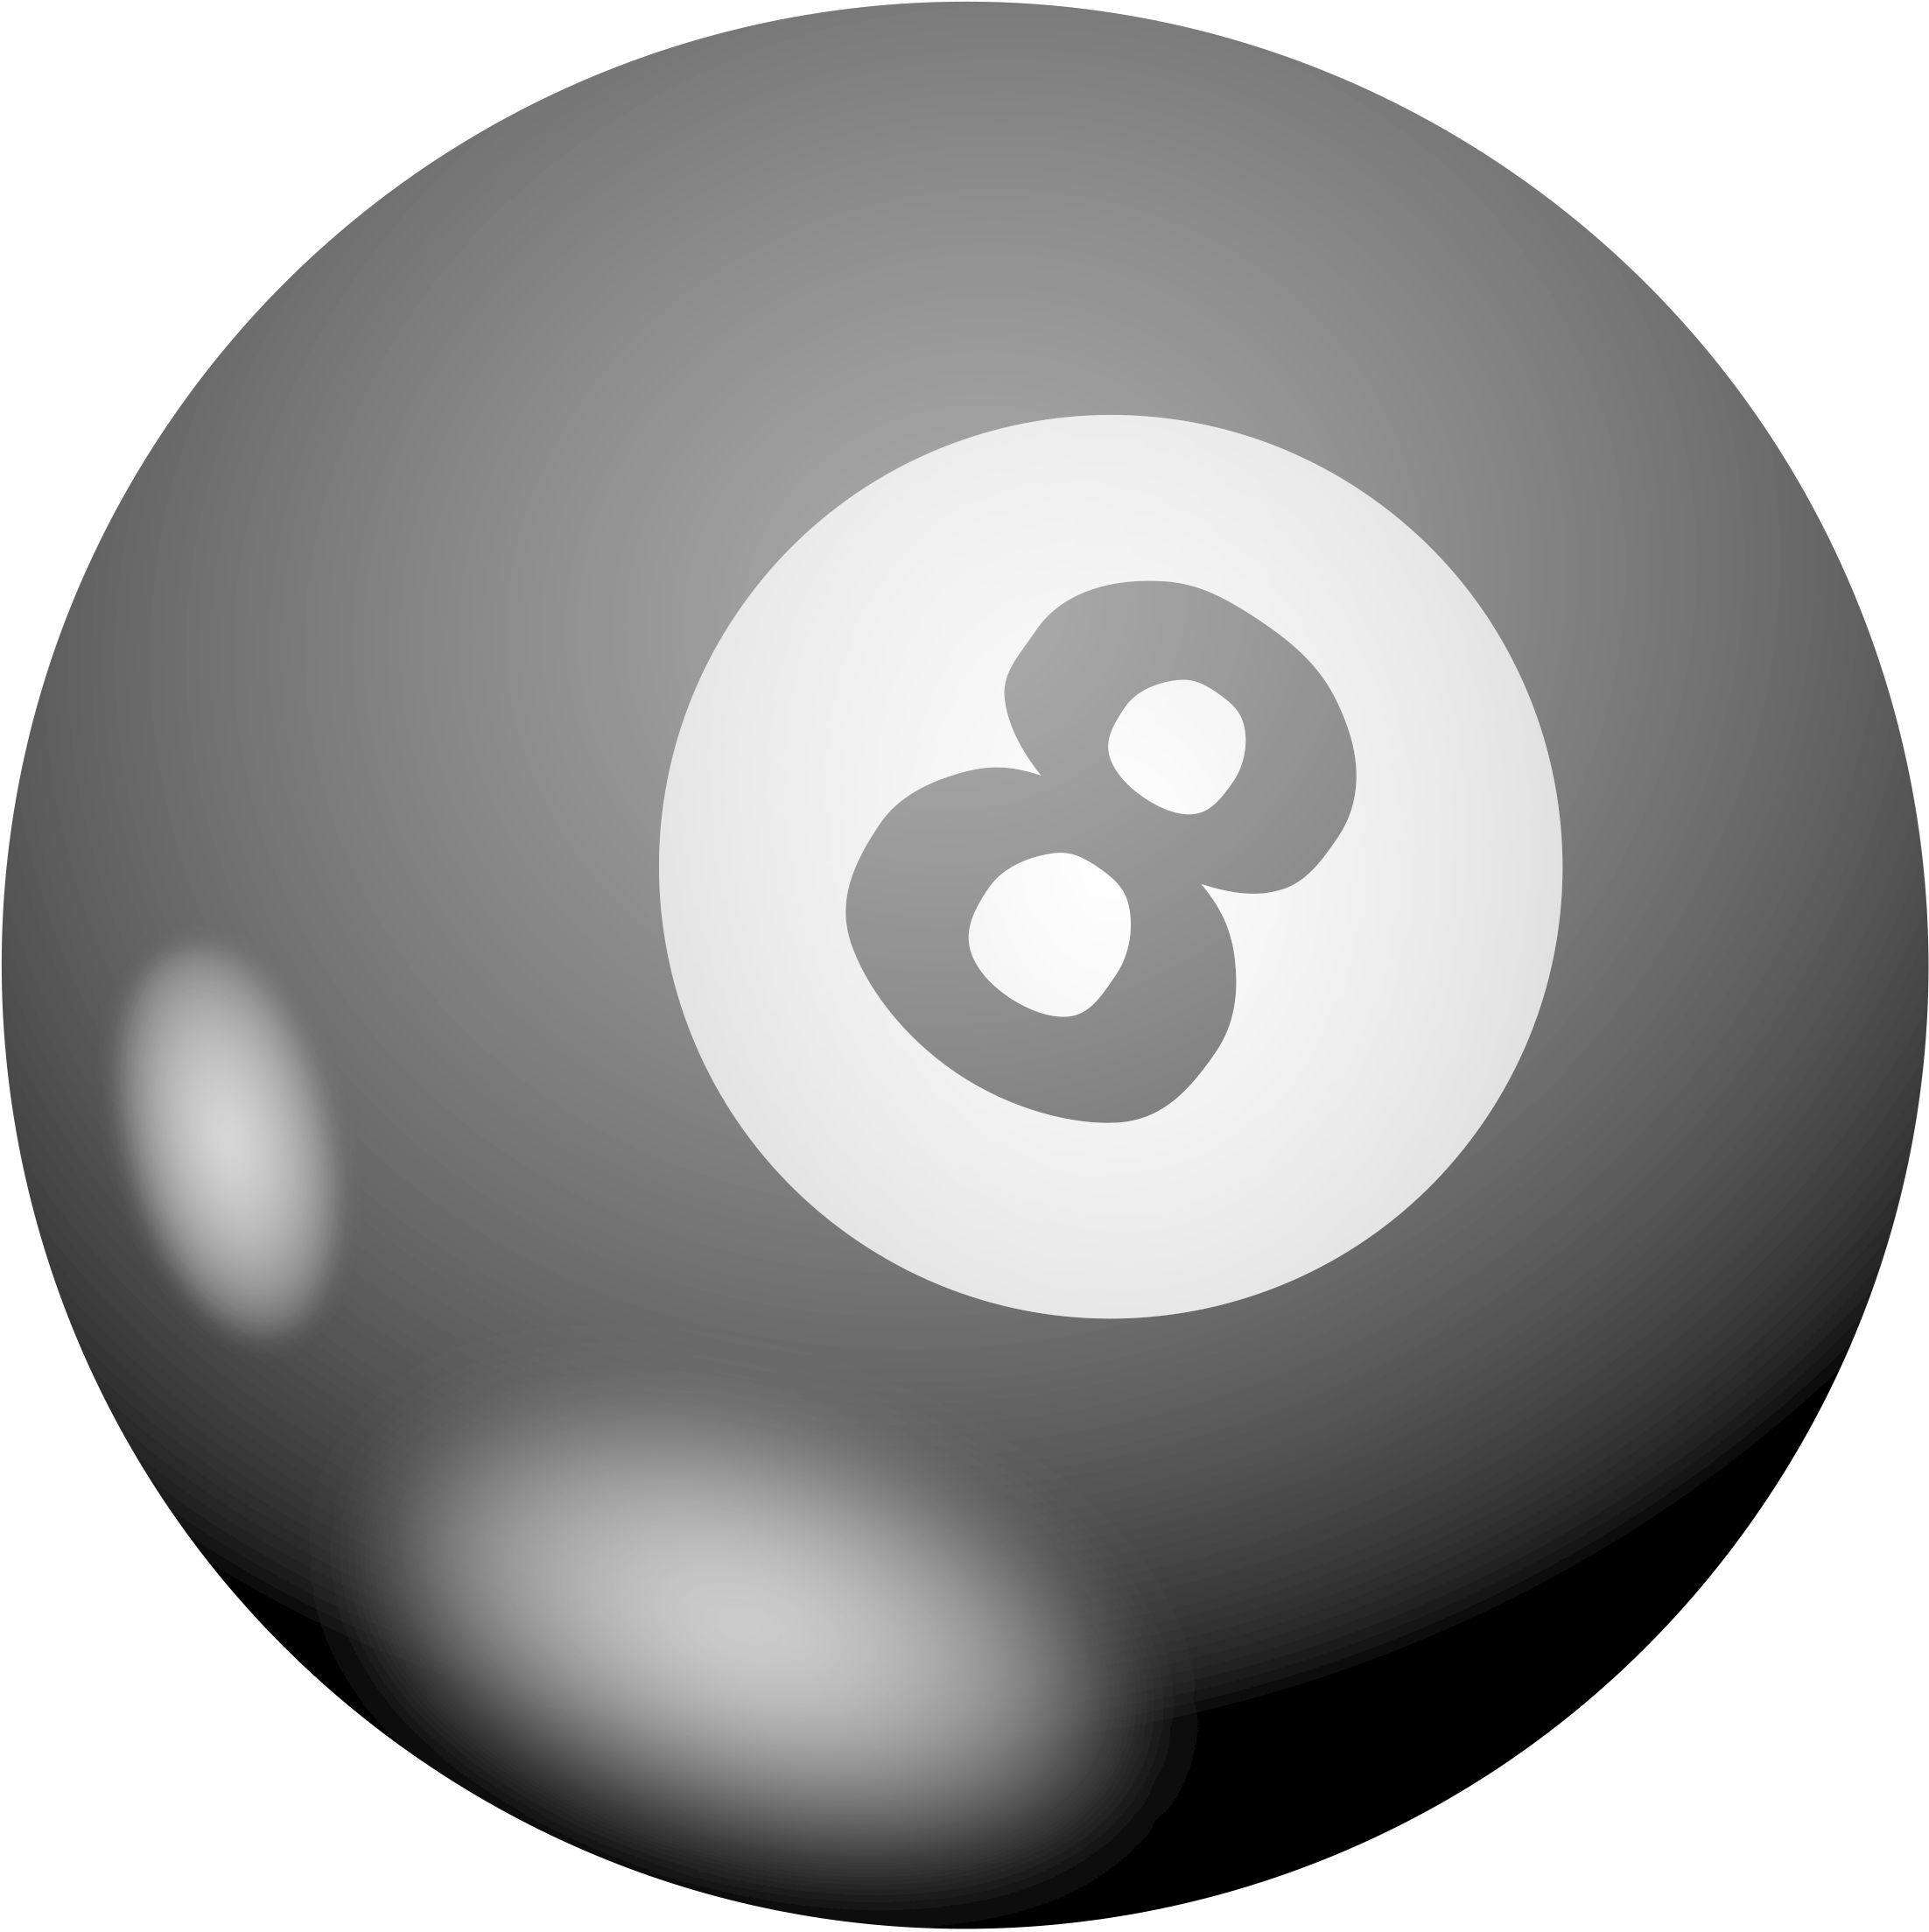 8 на черном шаре. Бильярд "8 Ball Pool". Бильярдный шар вектор. Биллиард шар 8. Шар для бильярда 8 вектор.